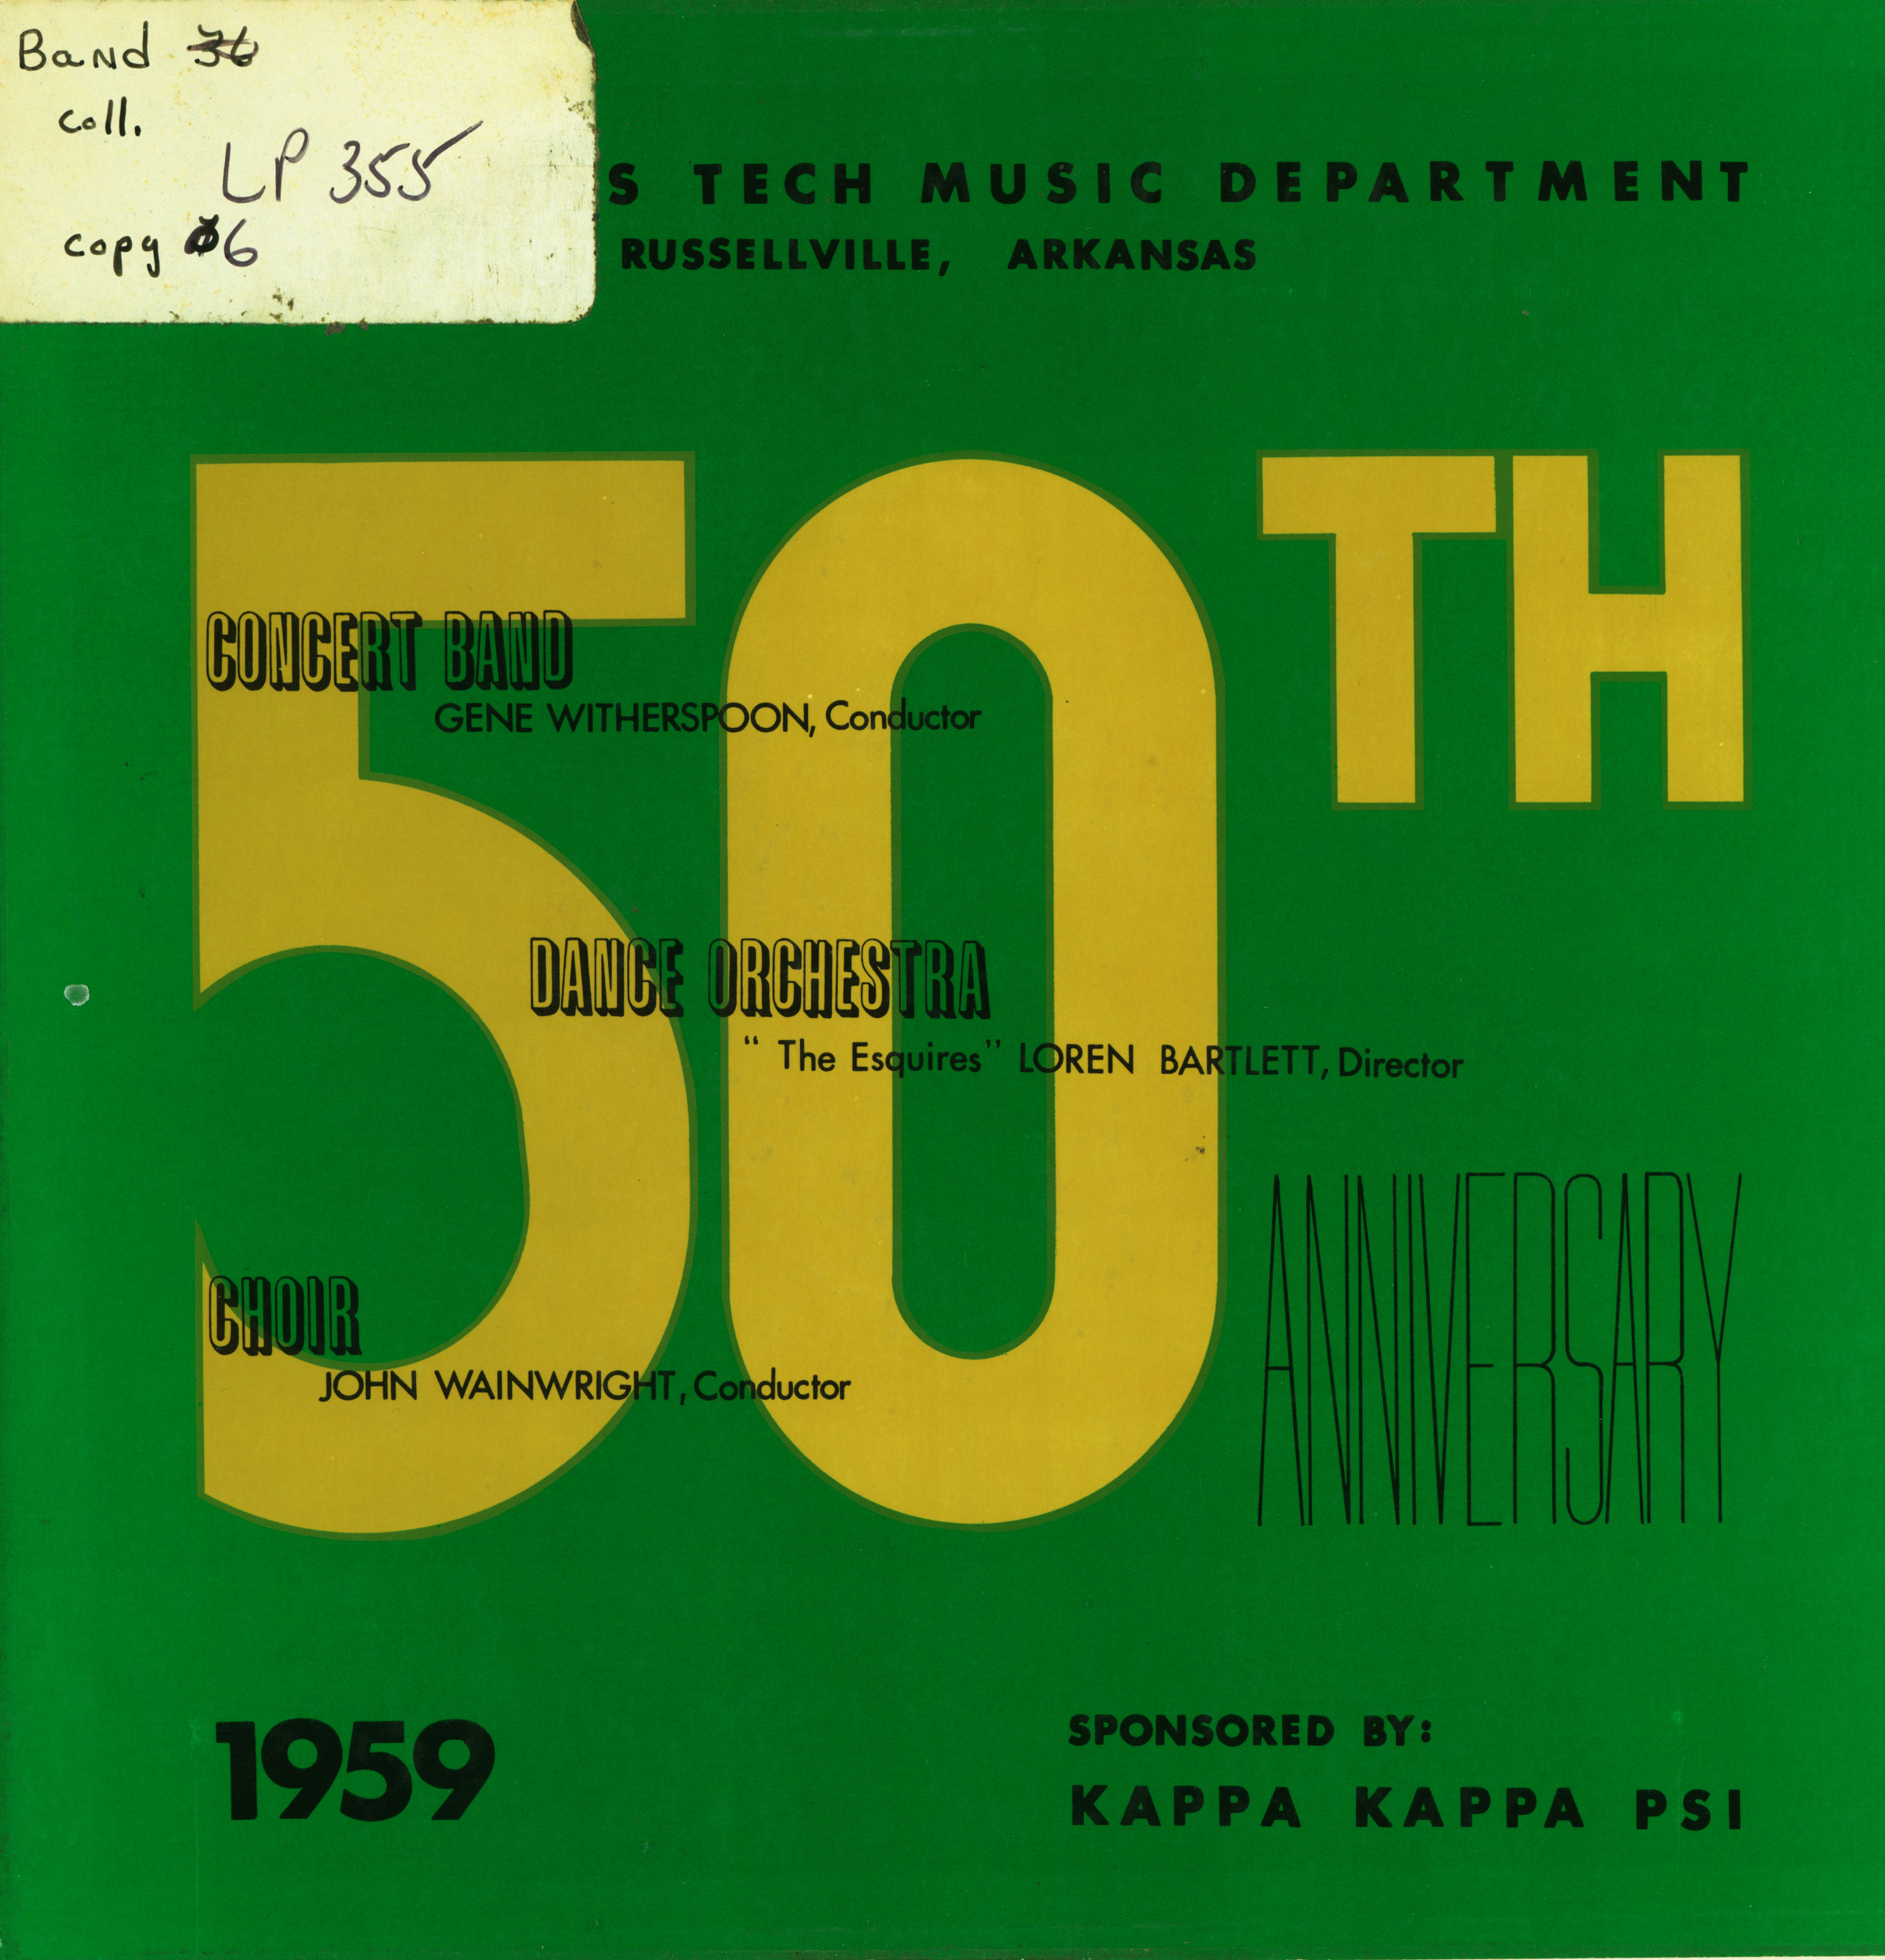 1959 Arkansas Tech Music Department 50th Anniversary